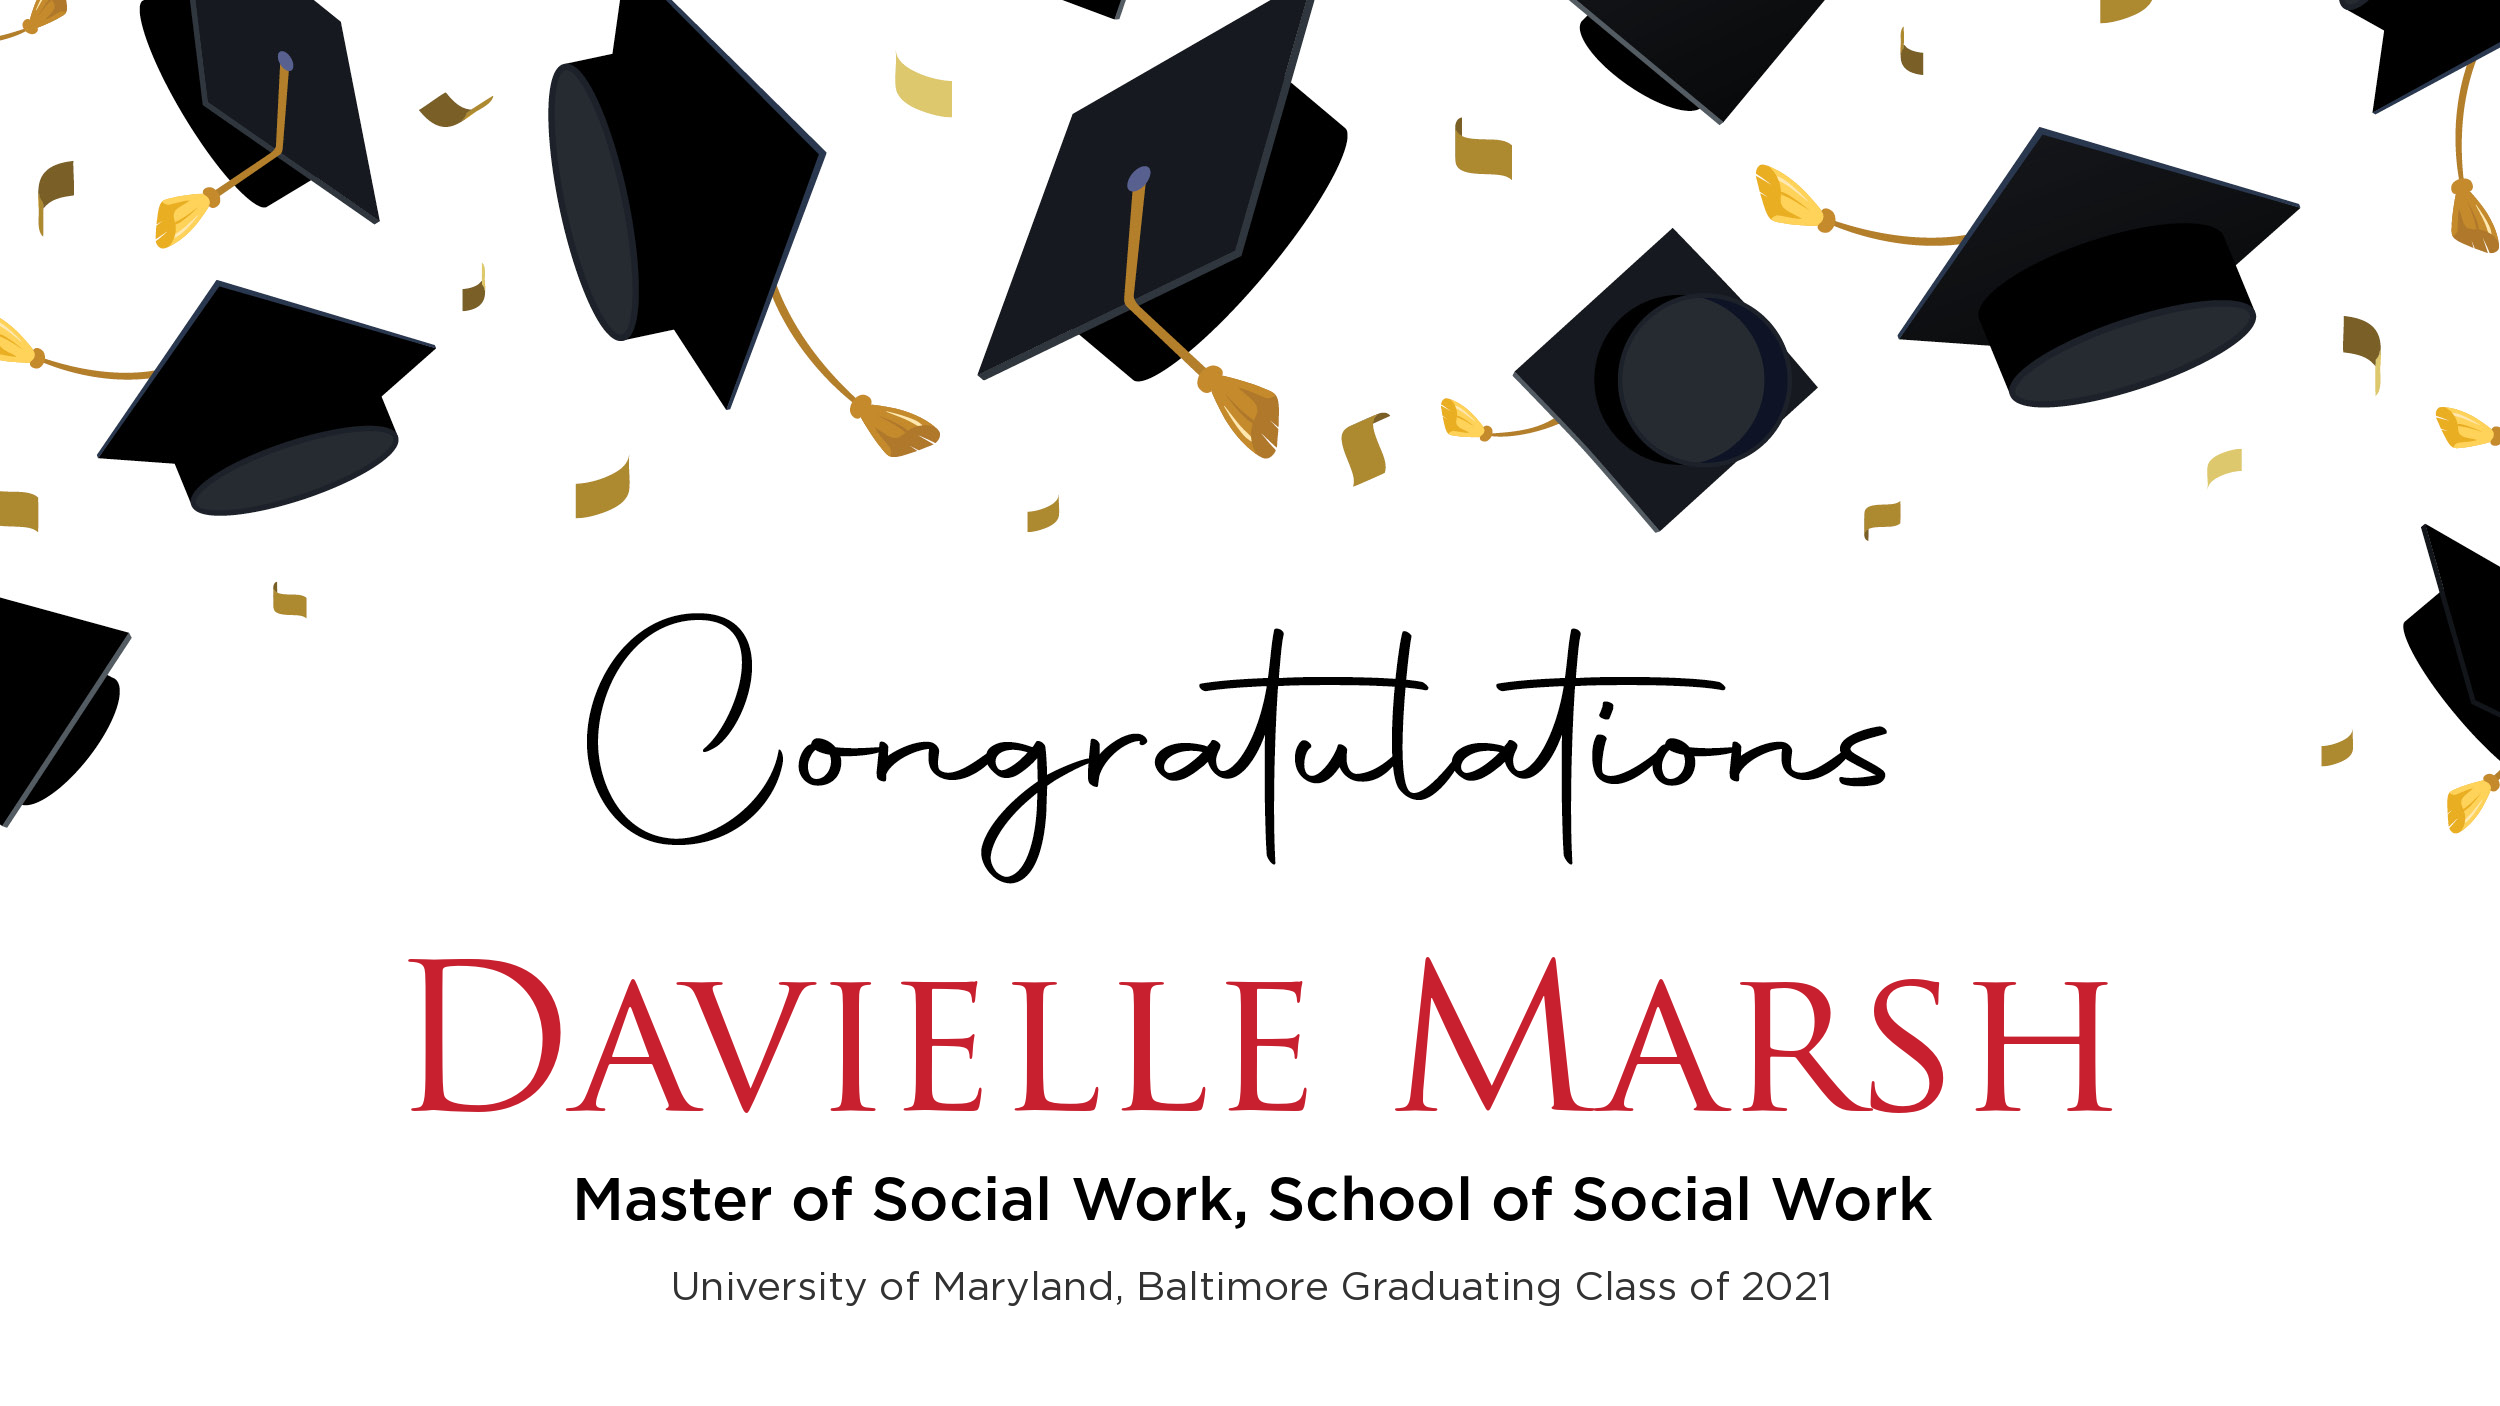 Congratulations Davielle Marsh, Master of Social Work